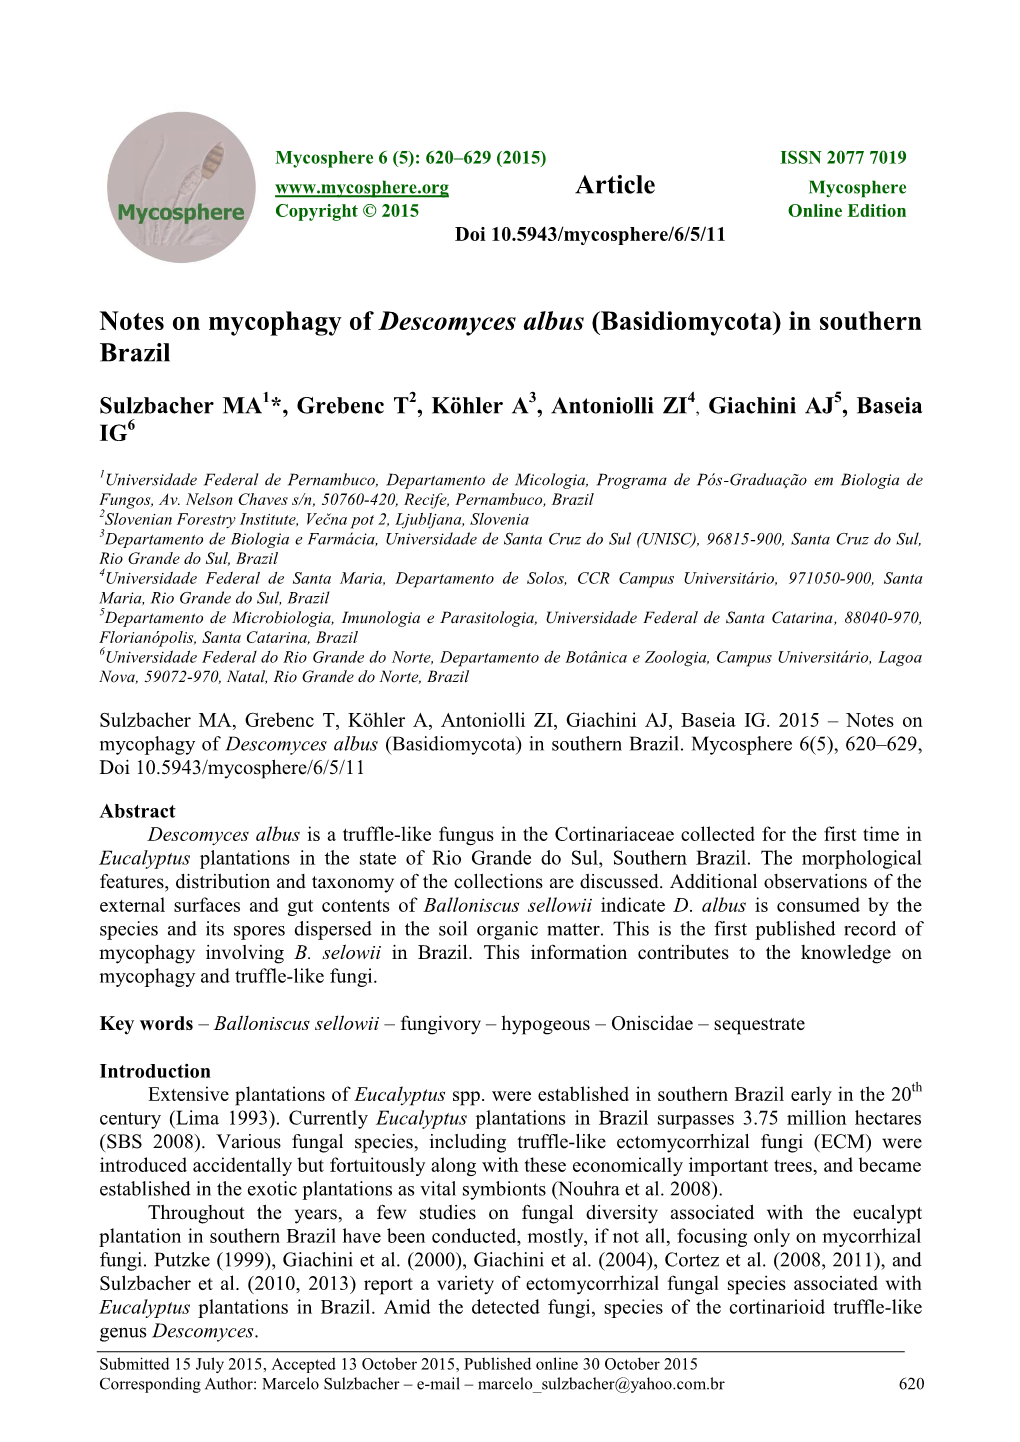 Notes on Mycophagy of Descomyces Albus (Basidiomycota) in Southern Brazil Article